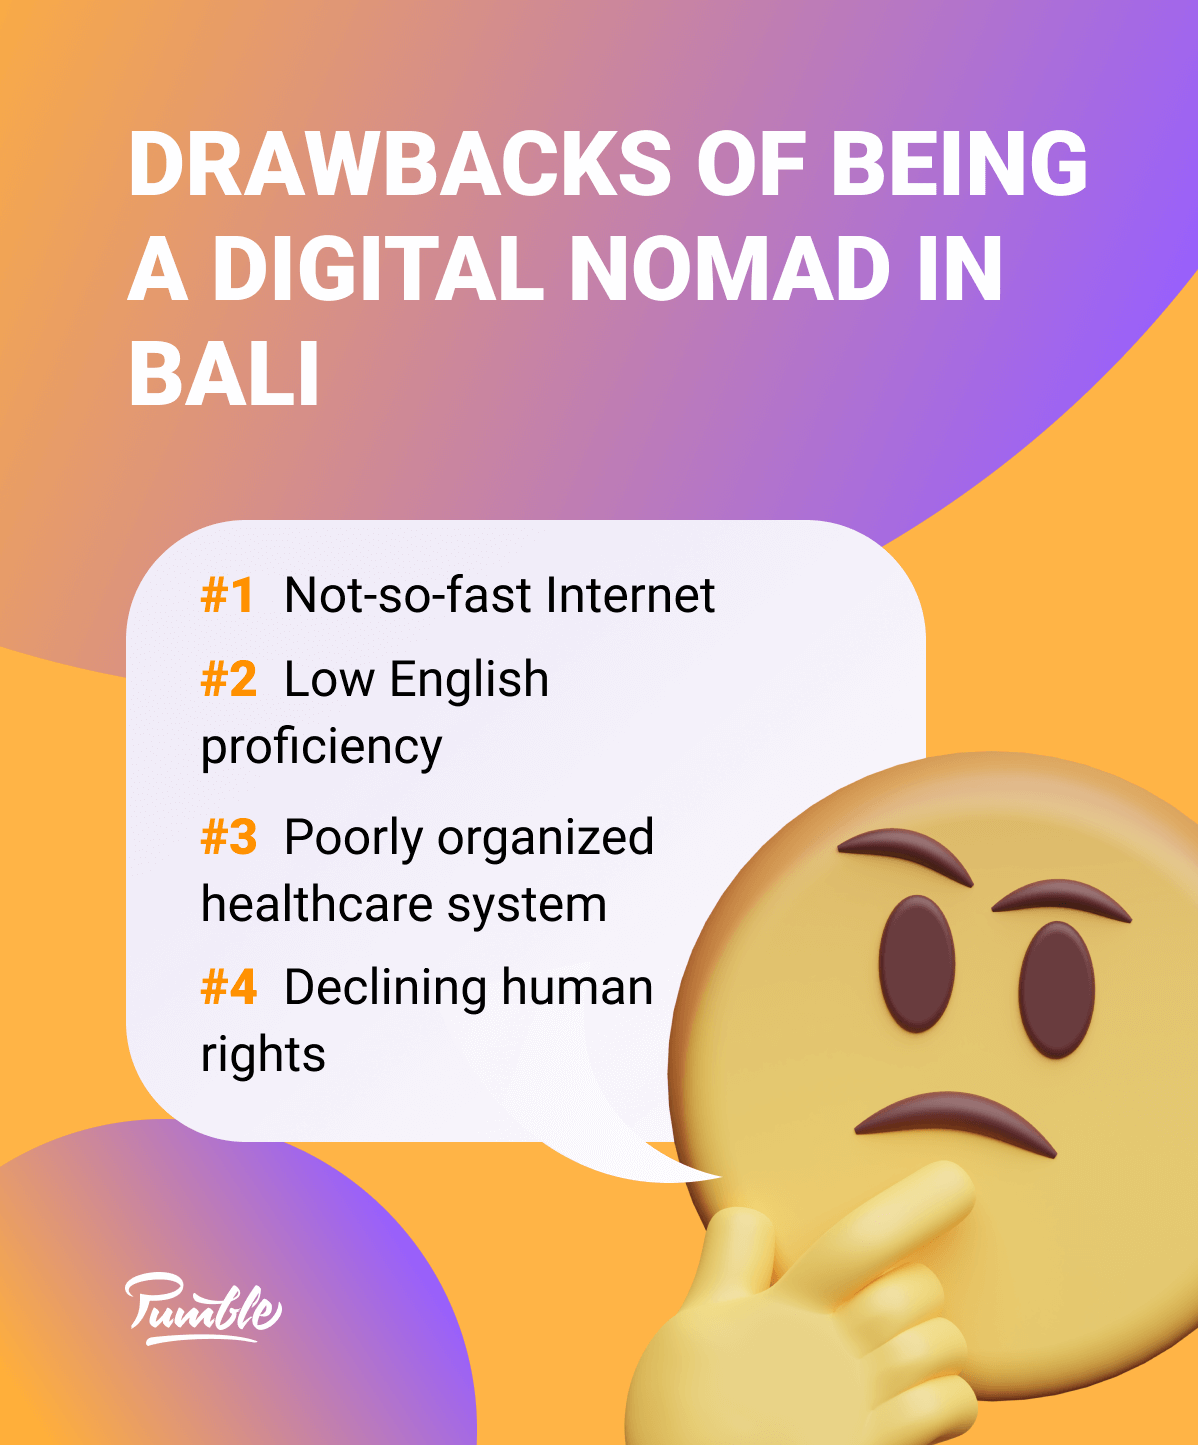 Drawbacks of being a digital nomad in Bali